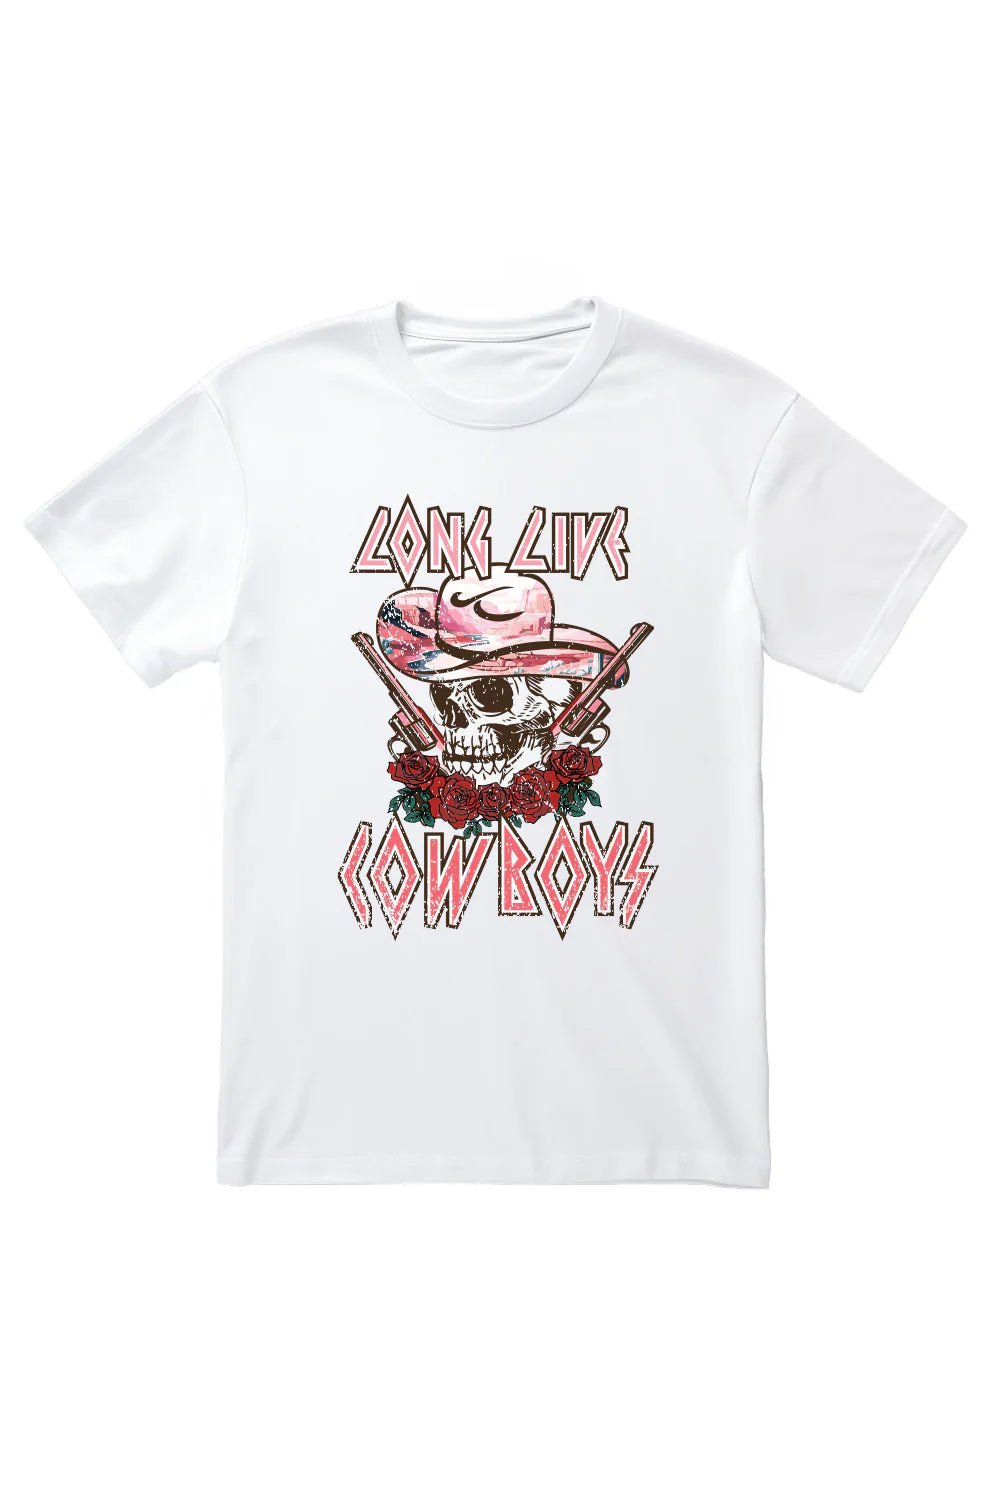 Long Live Cowboy T-Shirt in Sand (Custom Packs)